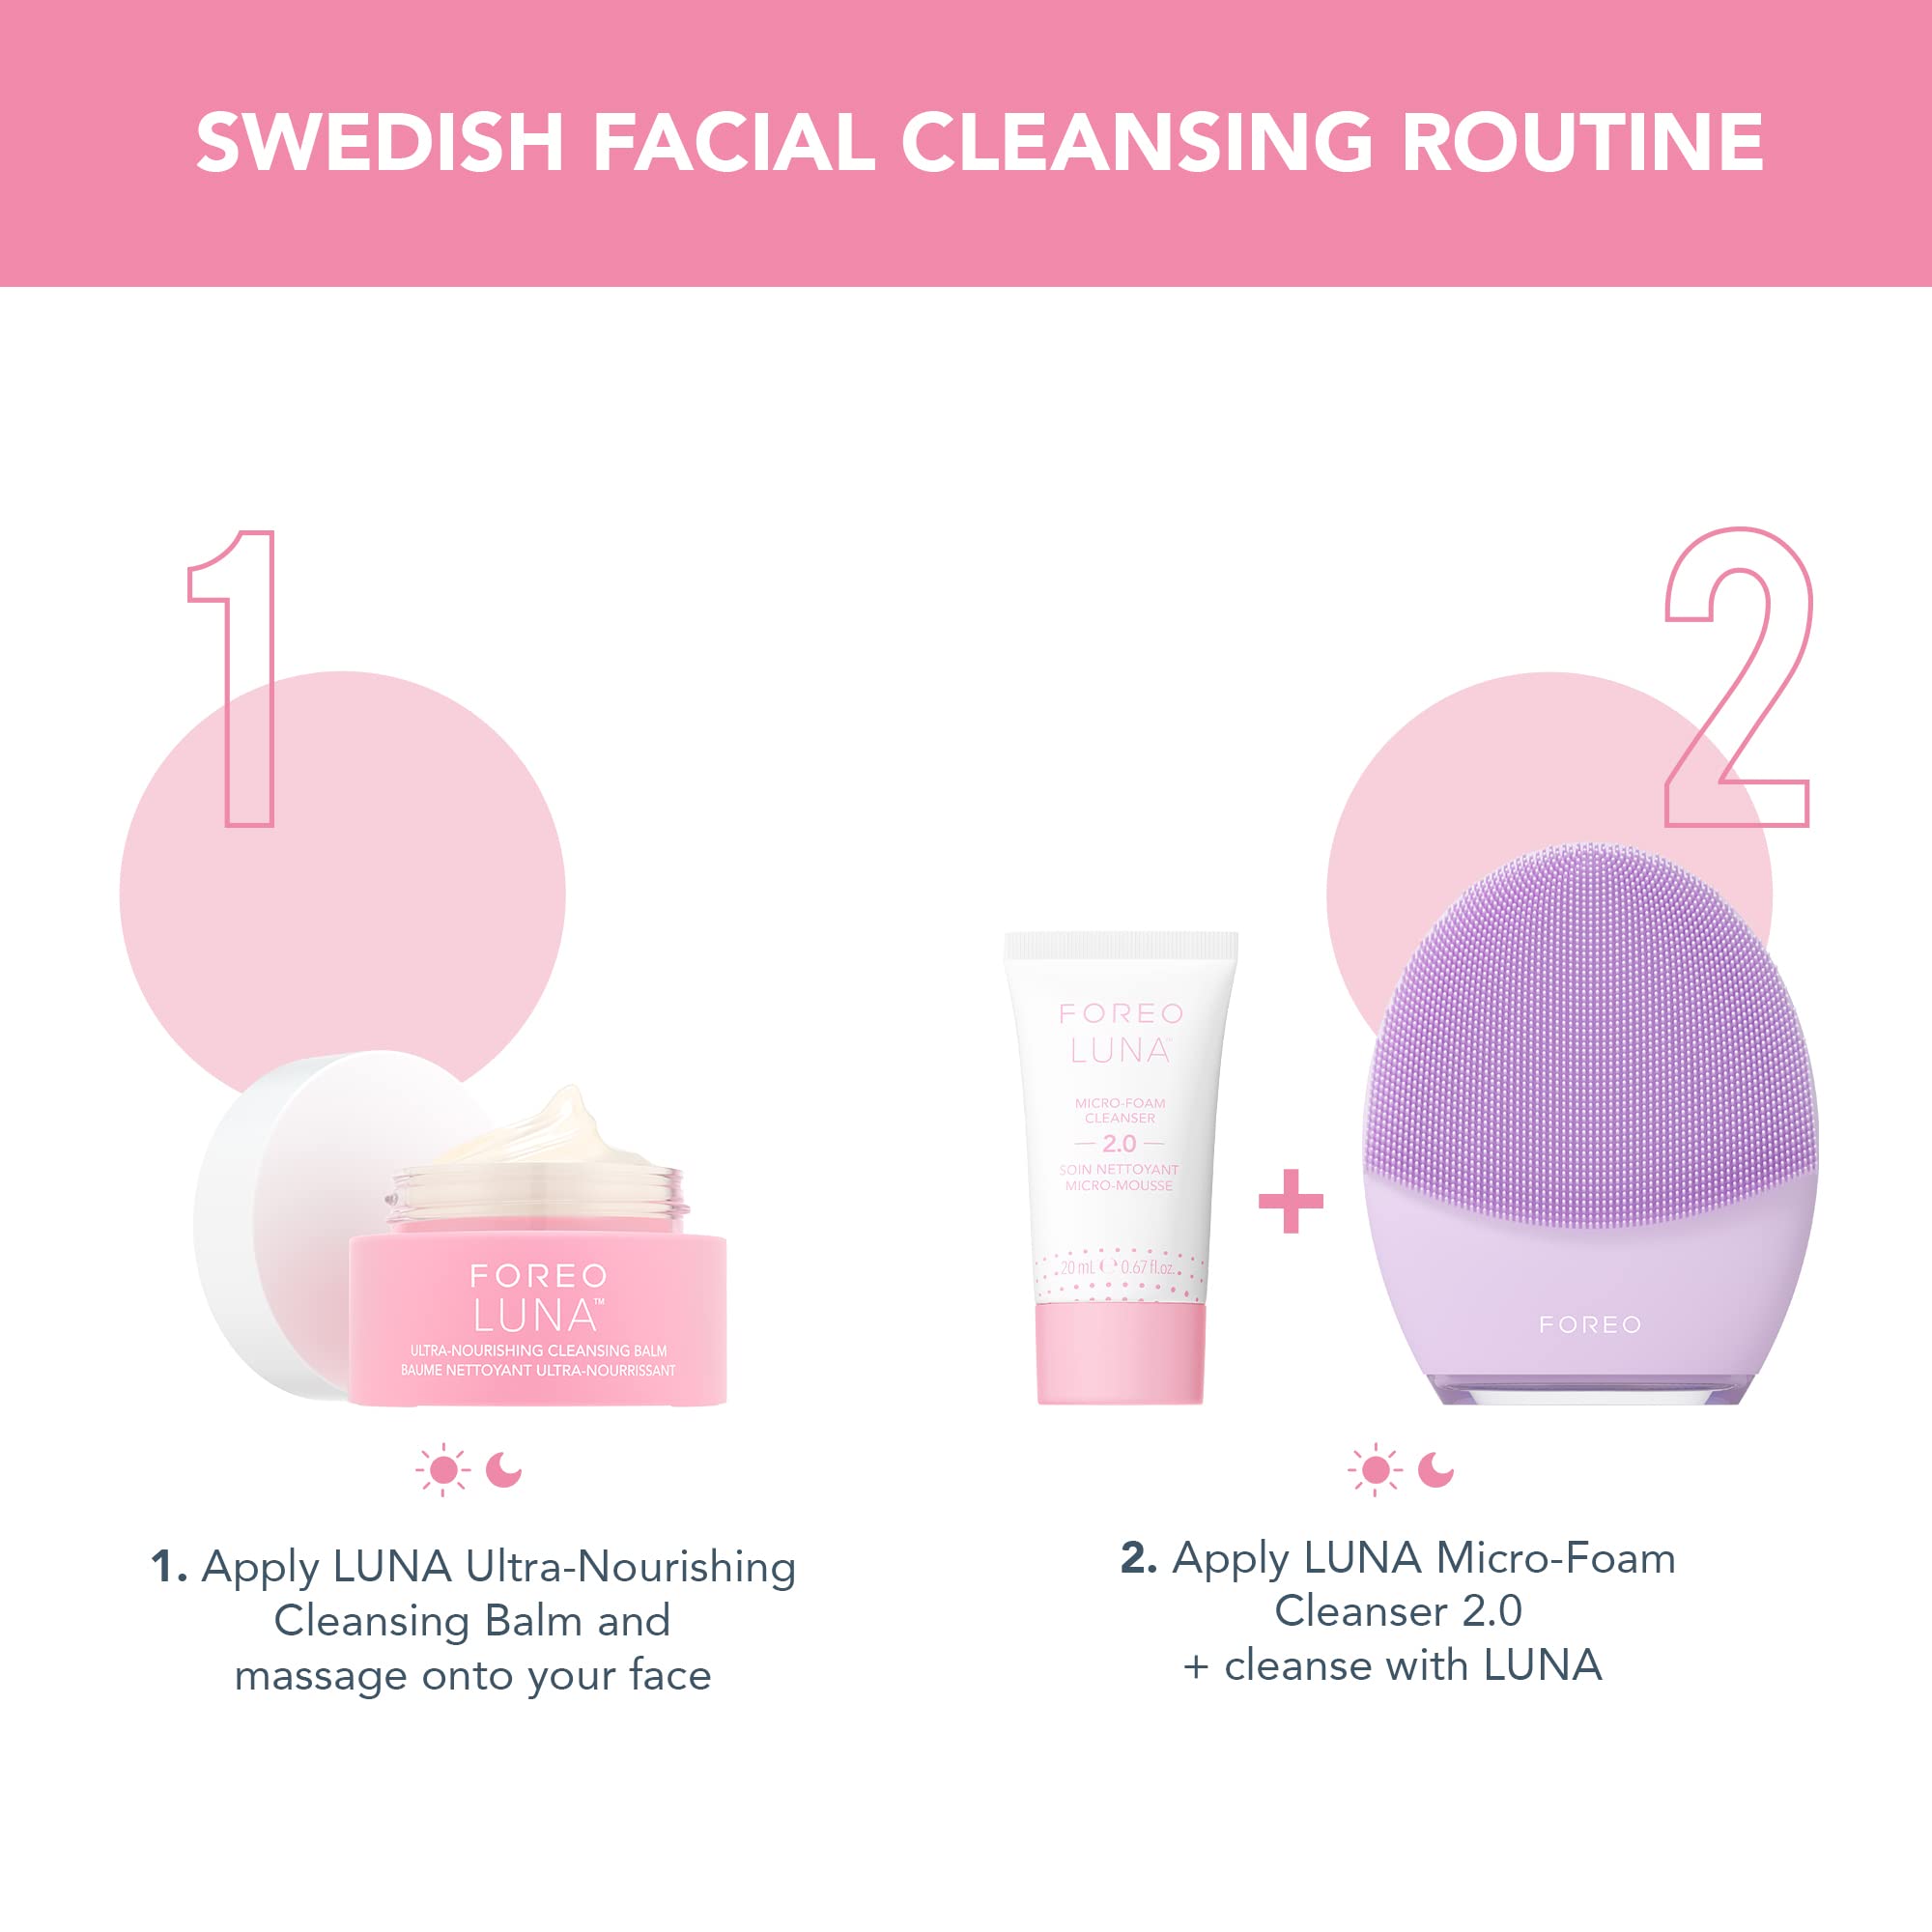 FOREO LUNA Micro-Foam Face Cleanser 2.0 - Face Wash - Pore Minimizer - All Skin Types Facial Cleanser - Travel Size - Vegan - Vitamin E - Facial Skin Care Products - 0.67 fl.oz